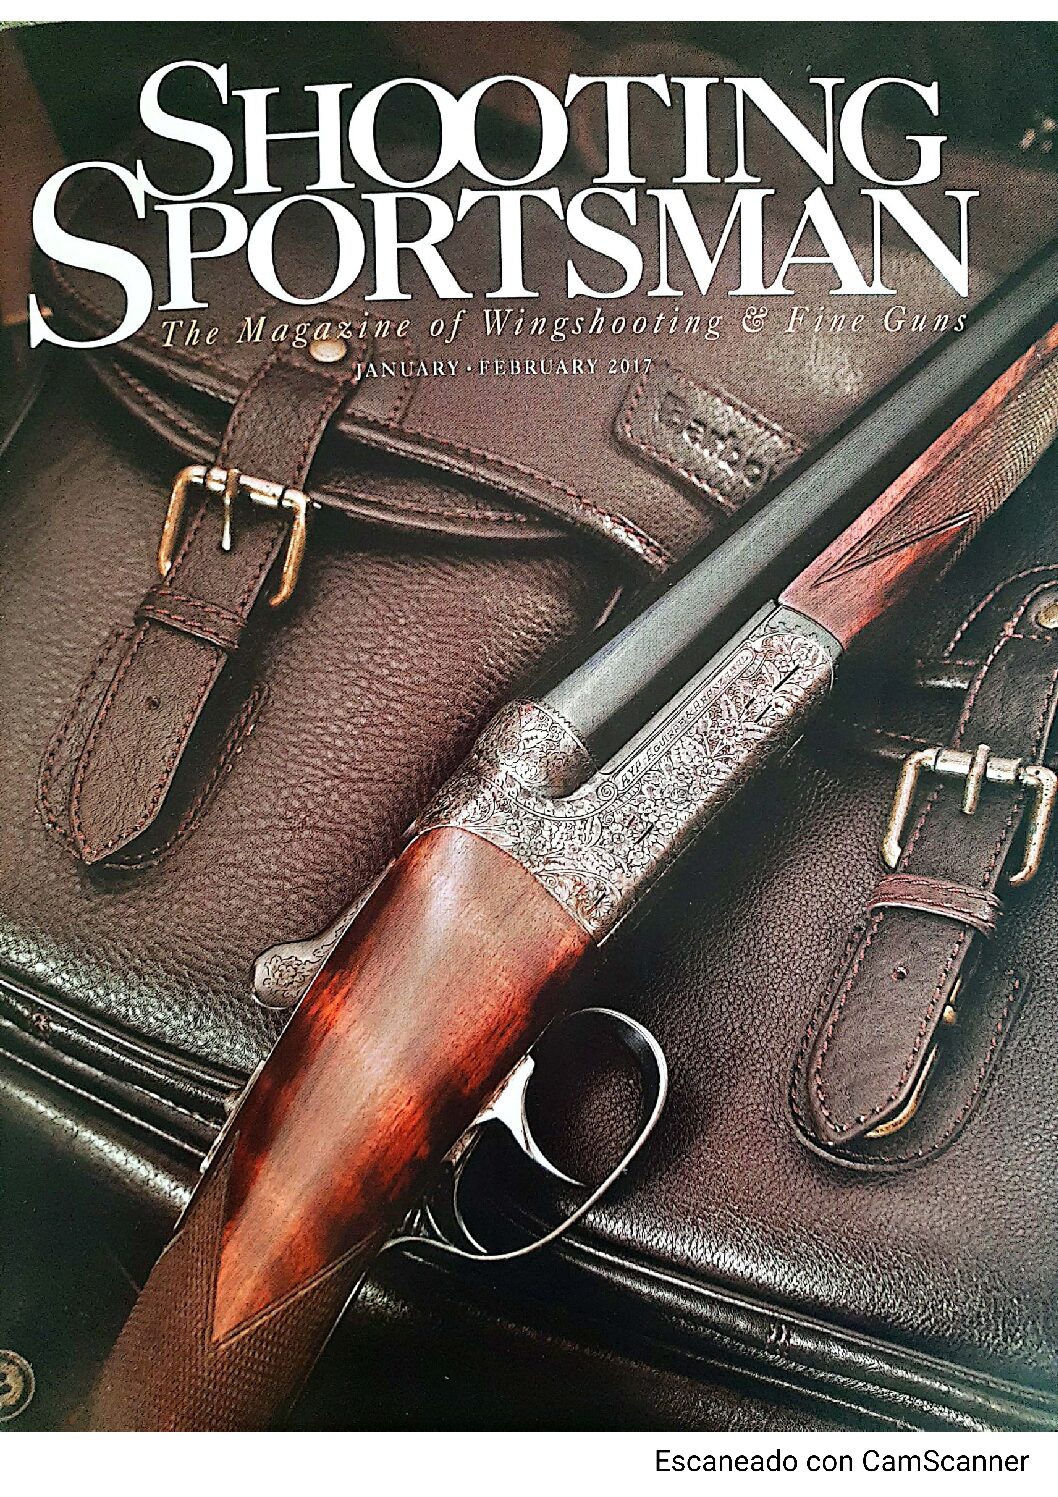 Shooting Sportsman’s Magazine Article